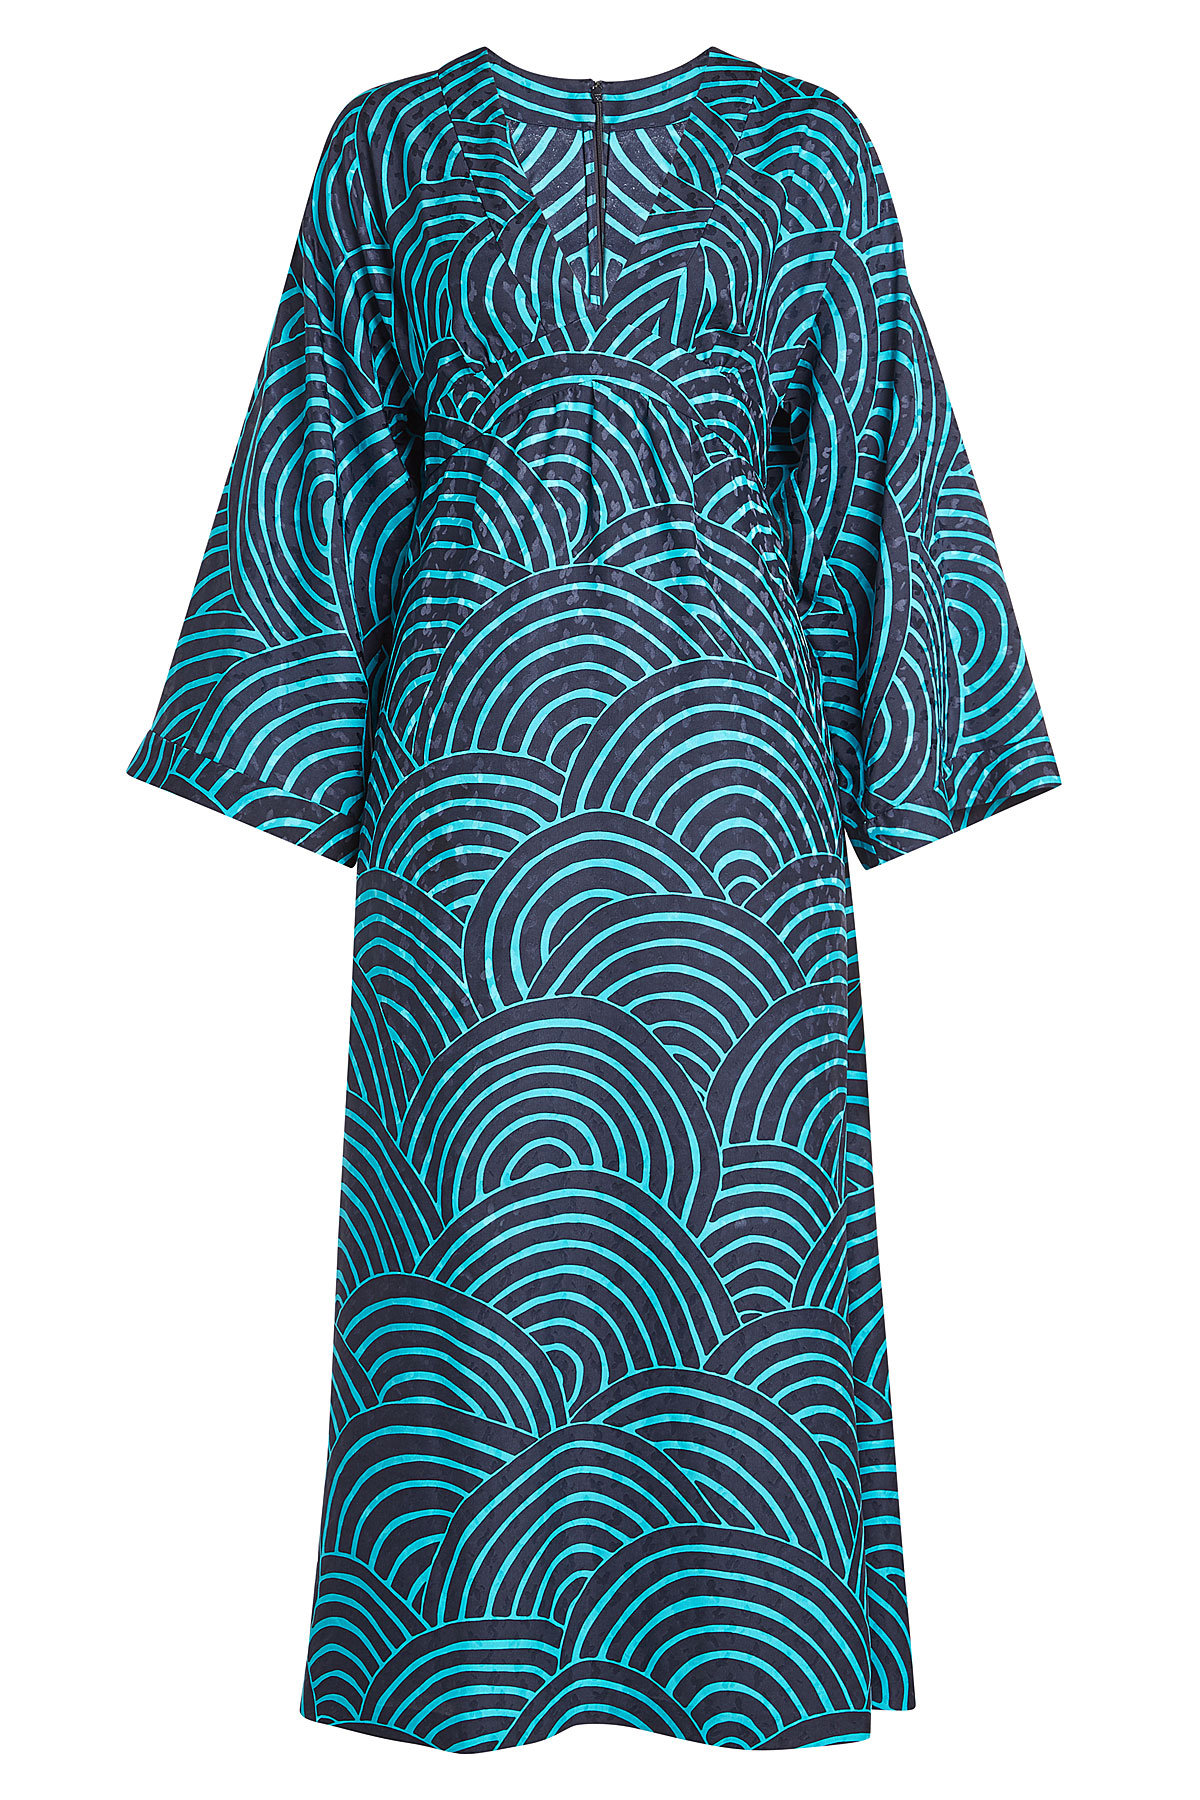 Vanessa Seward - Printed Silk Jacquard Dress